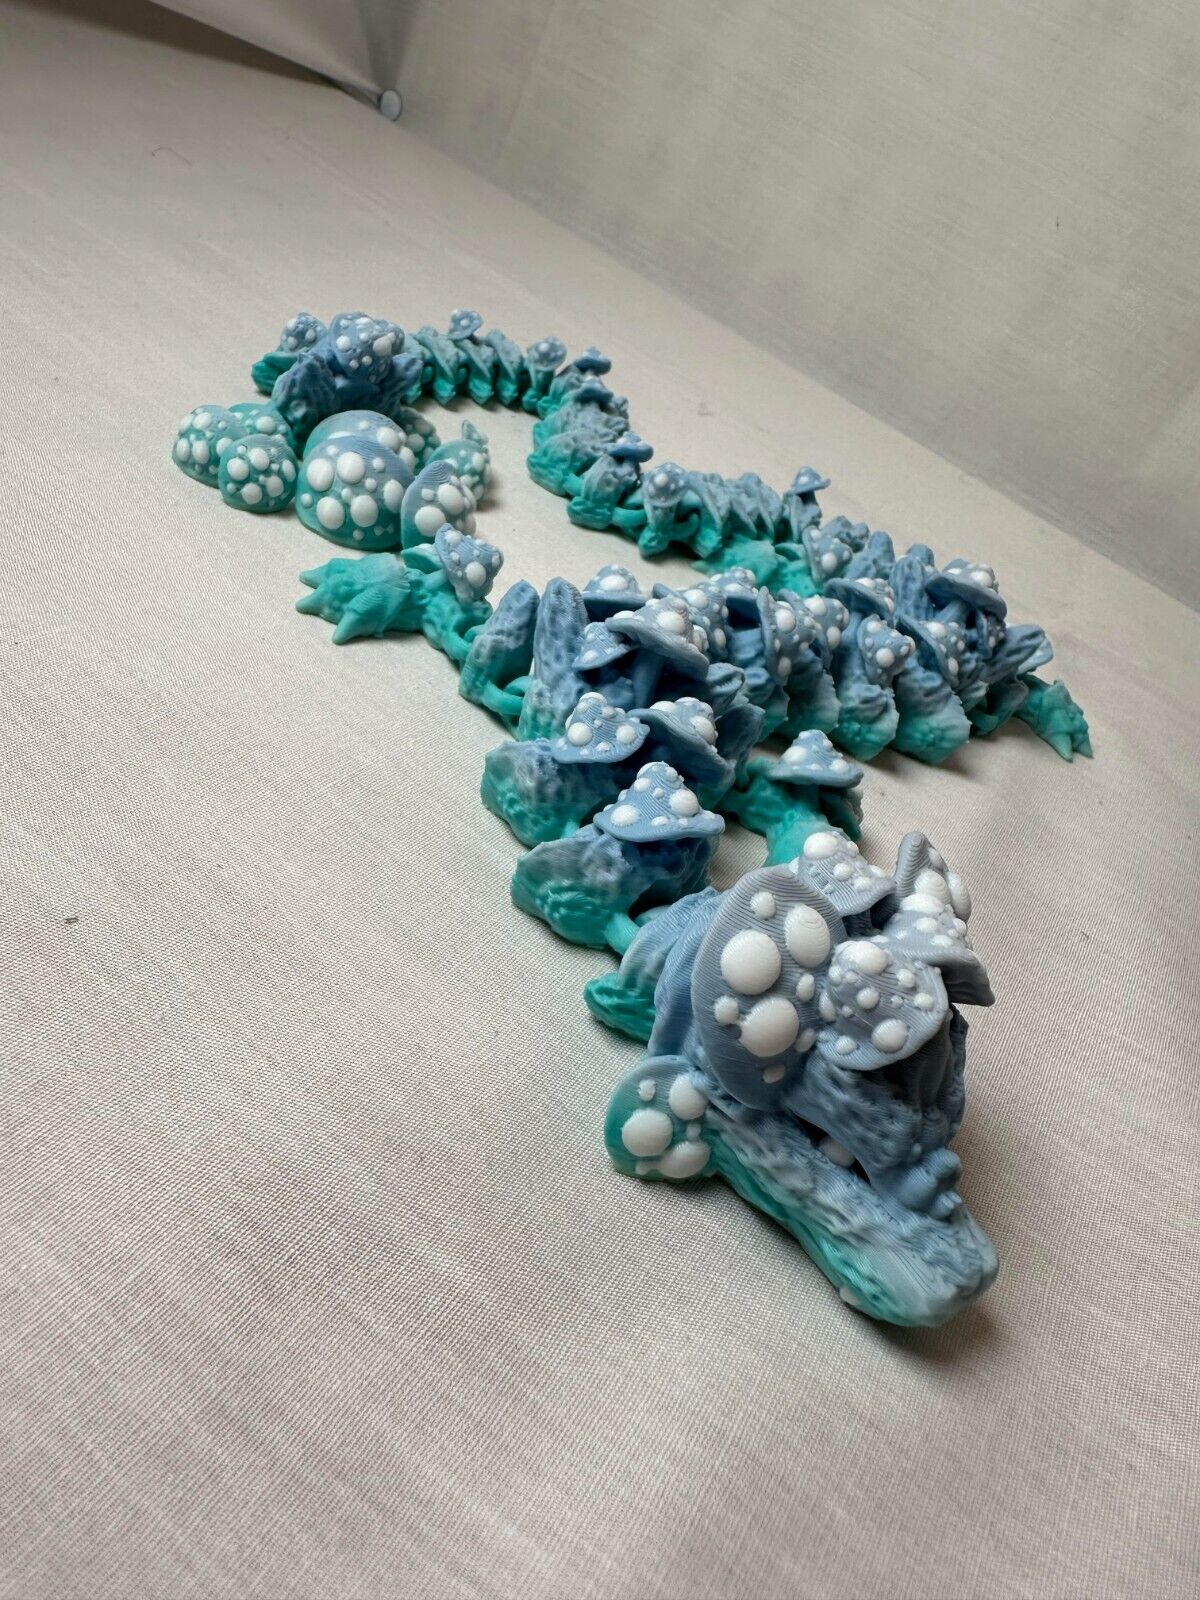 Articulating Mushroom Dragon 3D Printed Large 18.5 Inch Fidget Macaron Rainbow